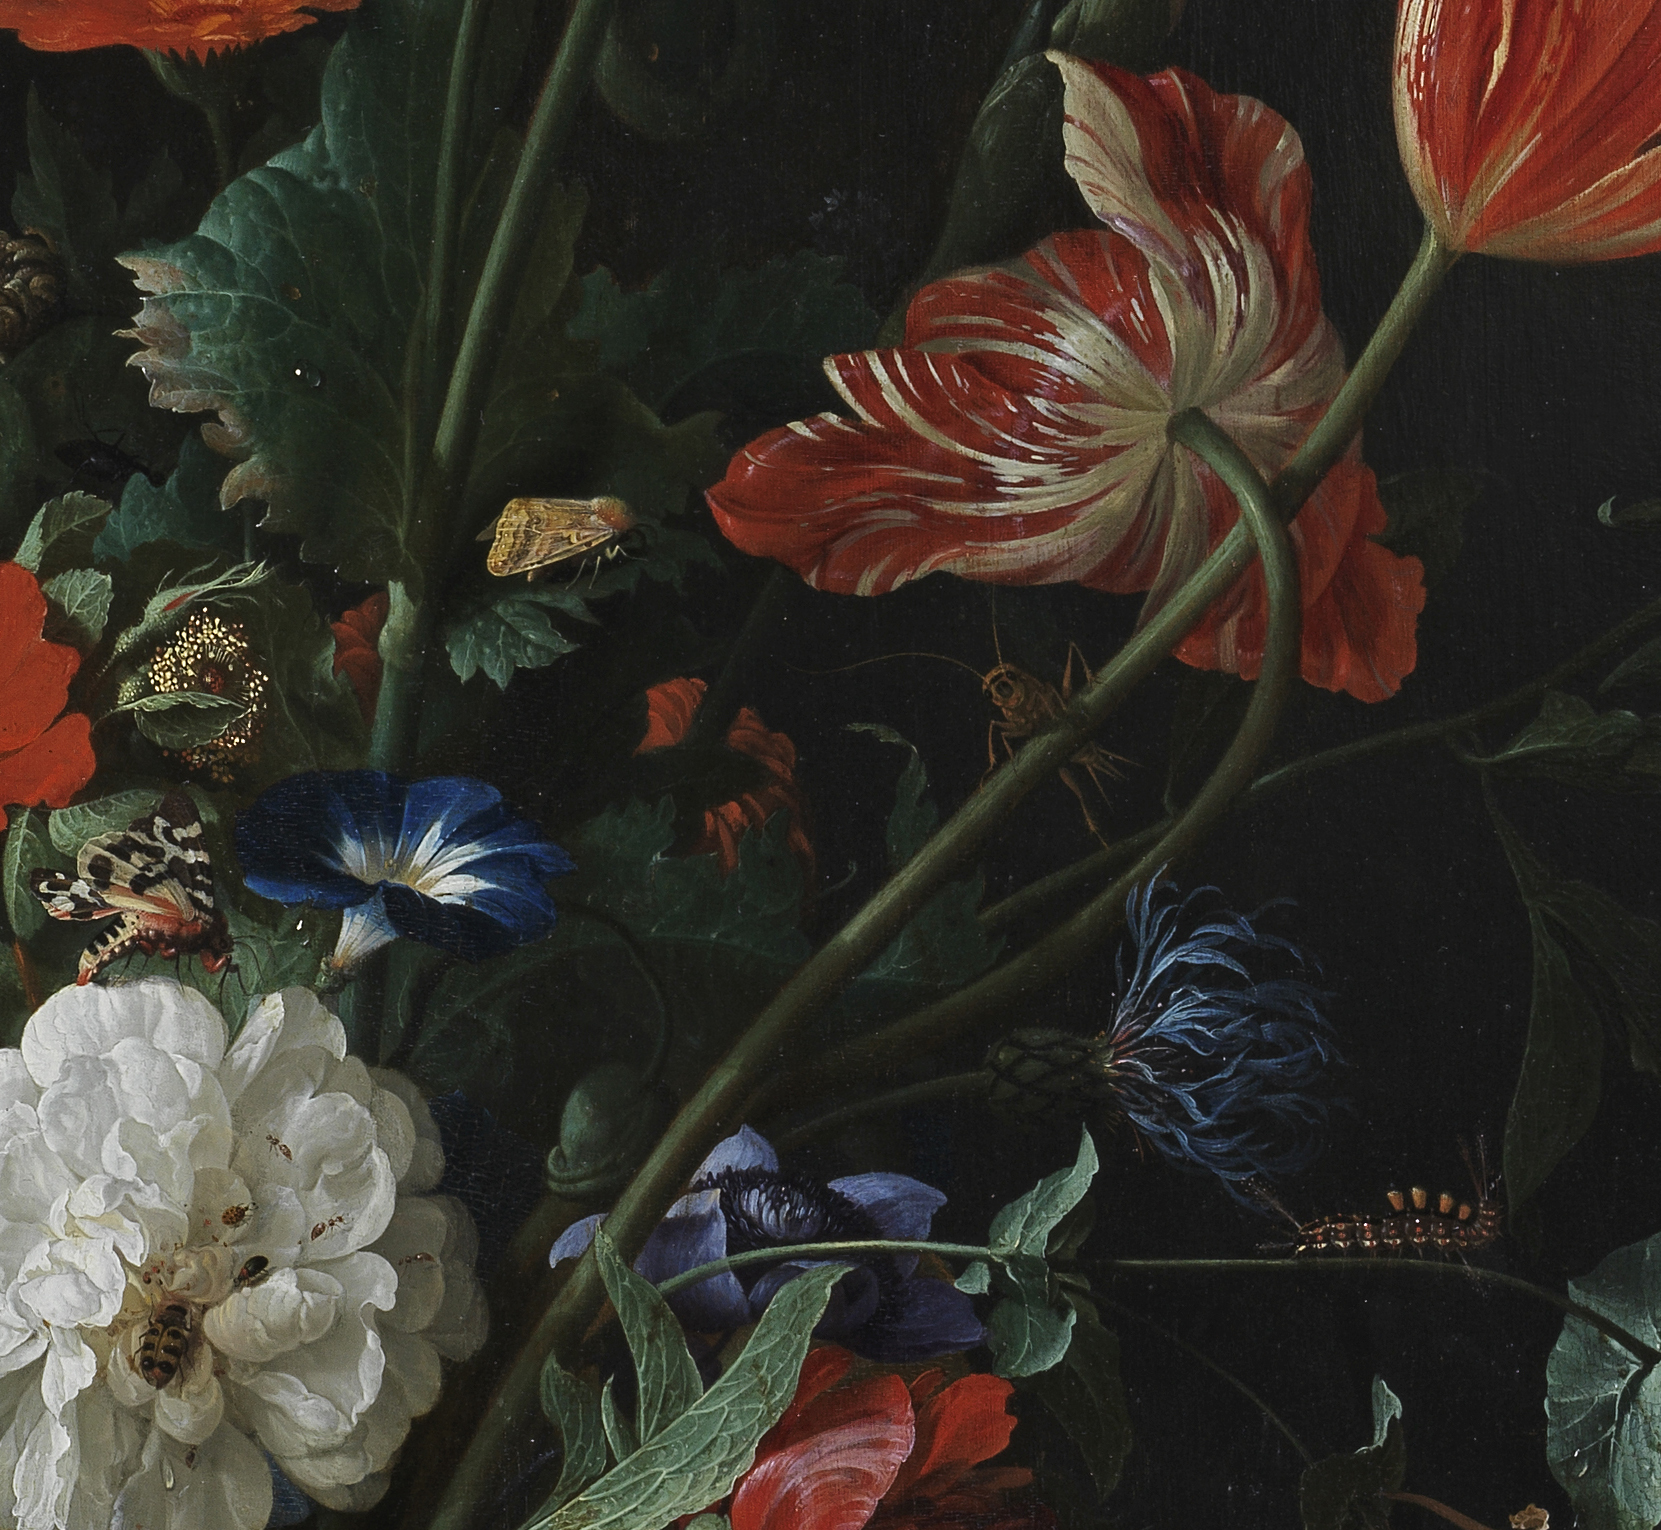 Detail from Flowers in a Glass Vase, by Jan Davidsz. de Heem (c) The Fitzwilliam Museum